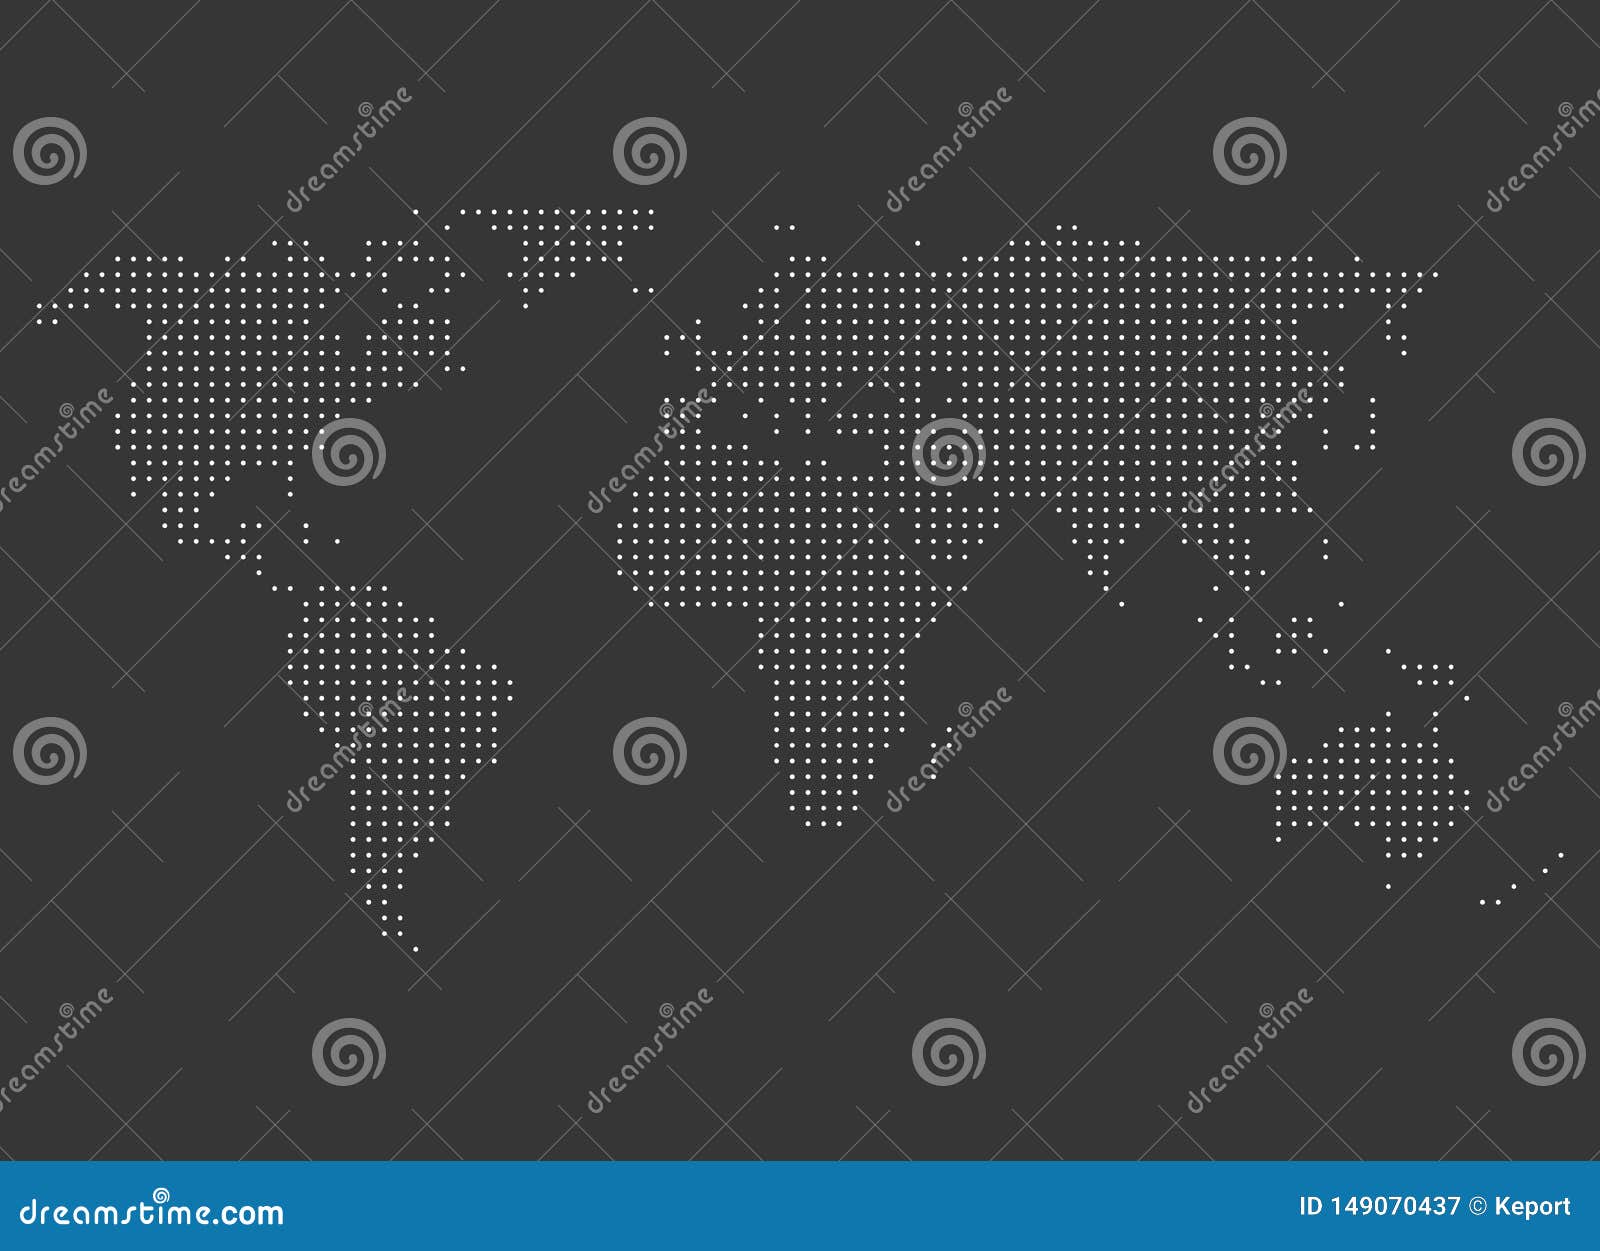 Dotted World Map Dark Grey And White Stock Illustration Illustration